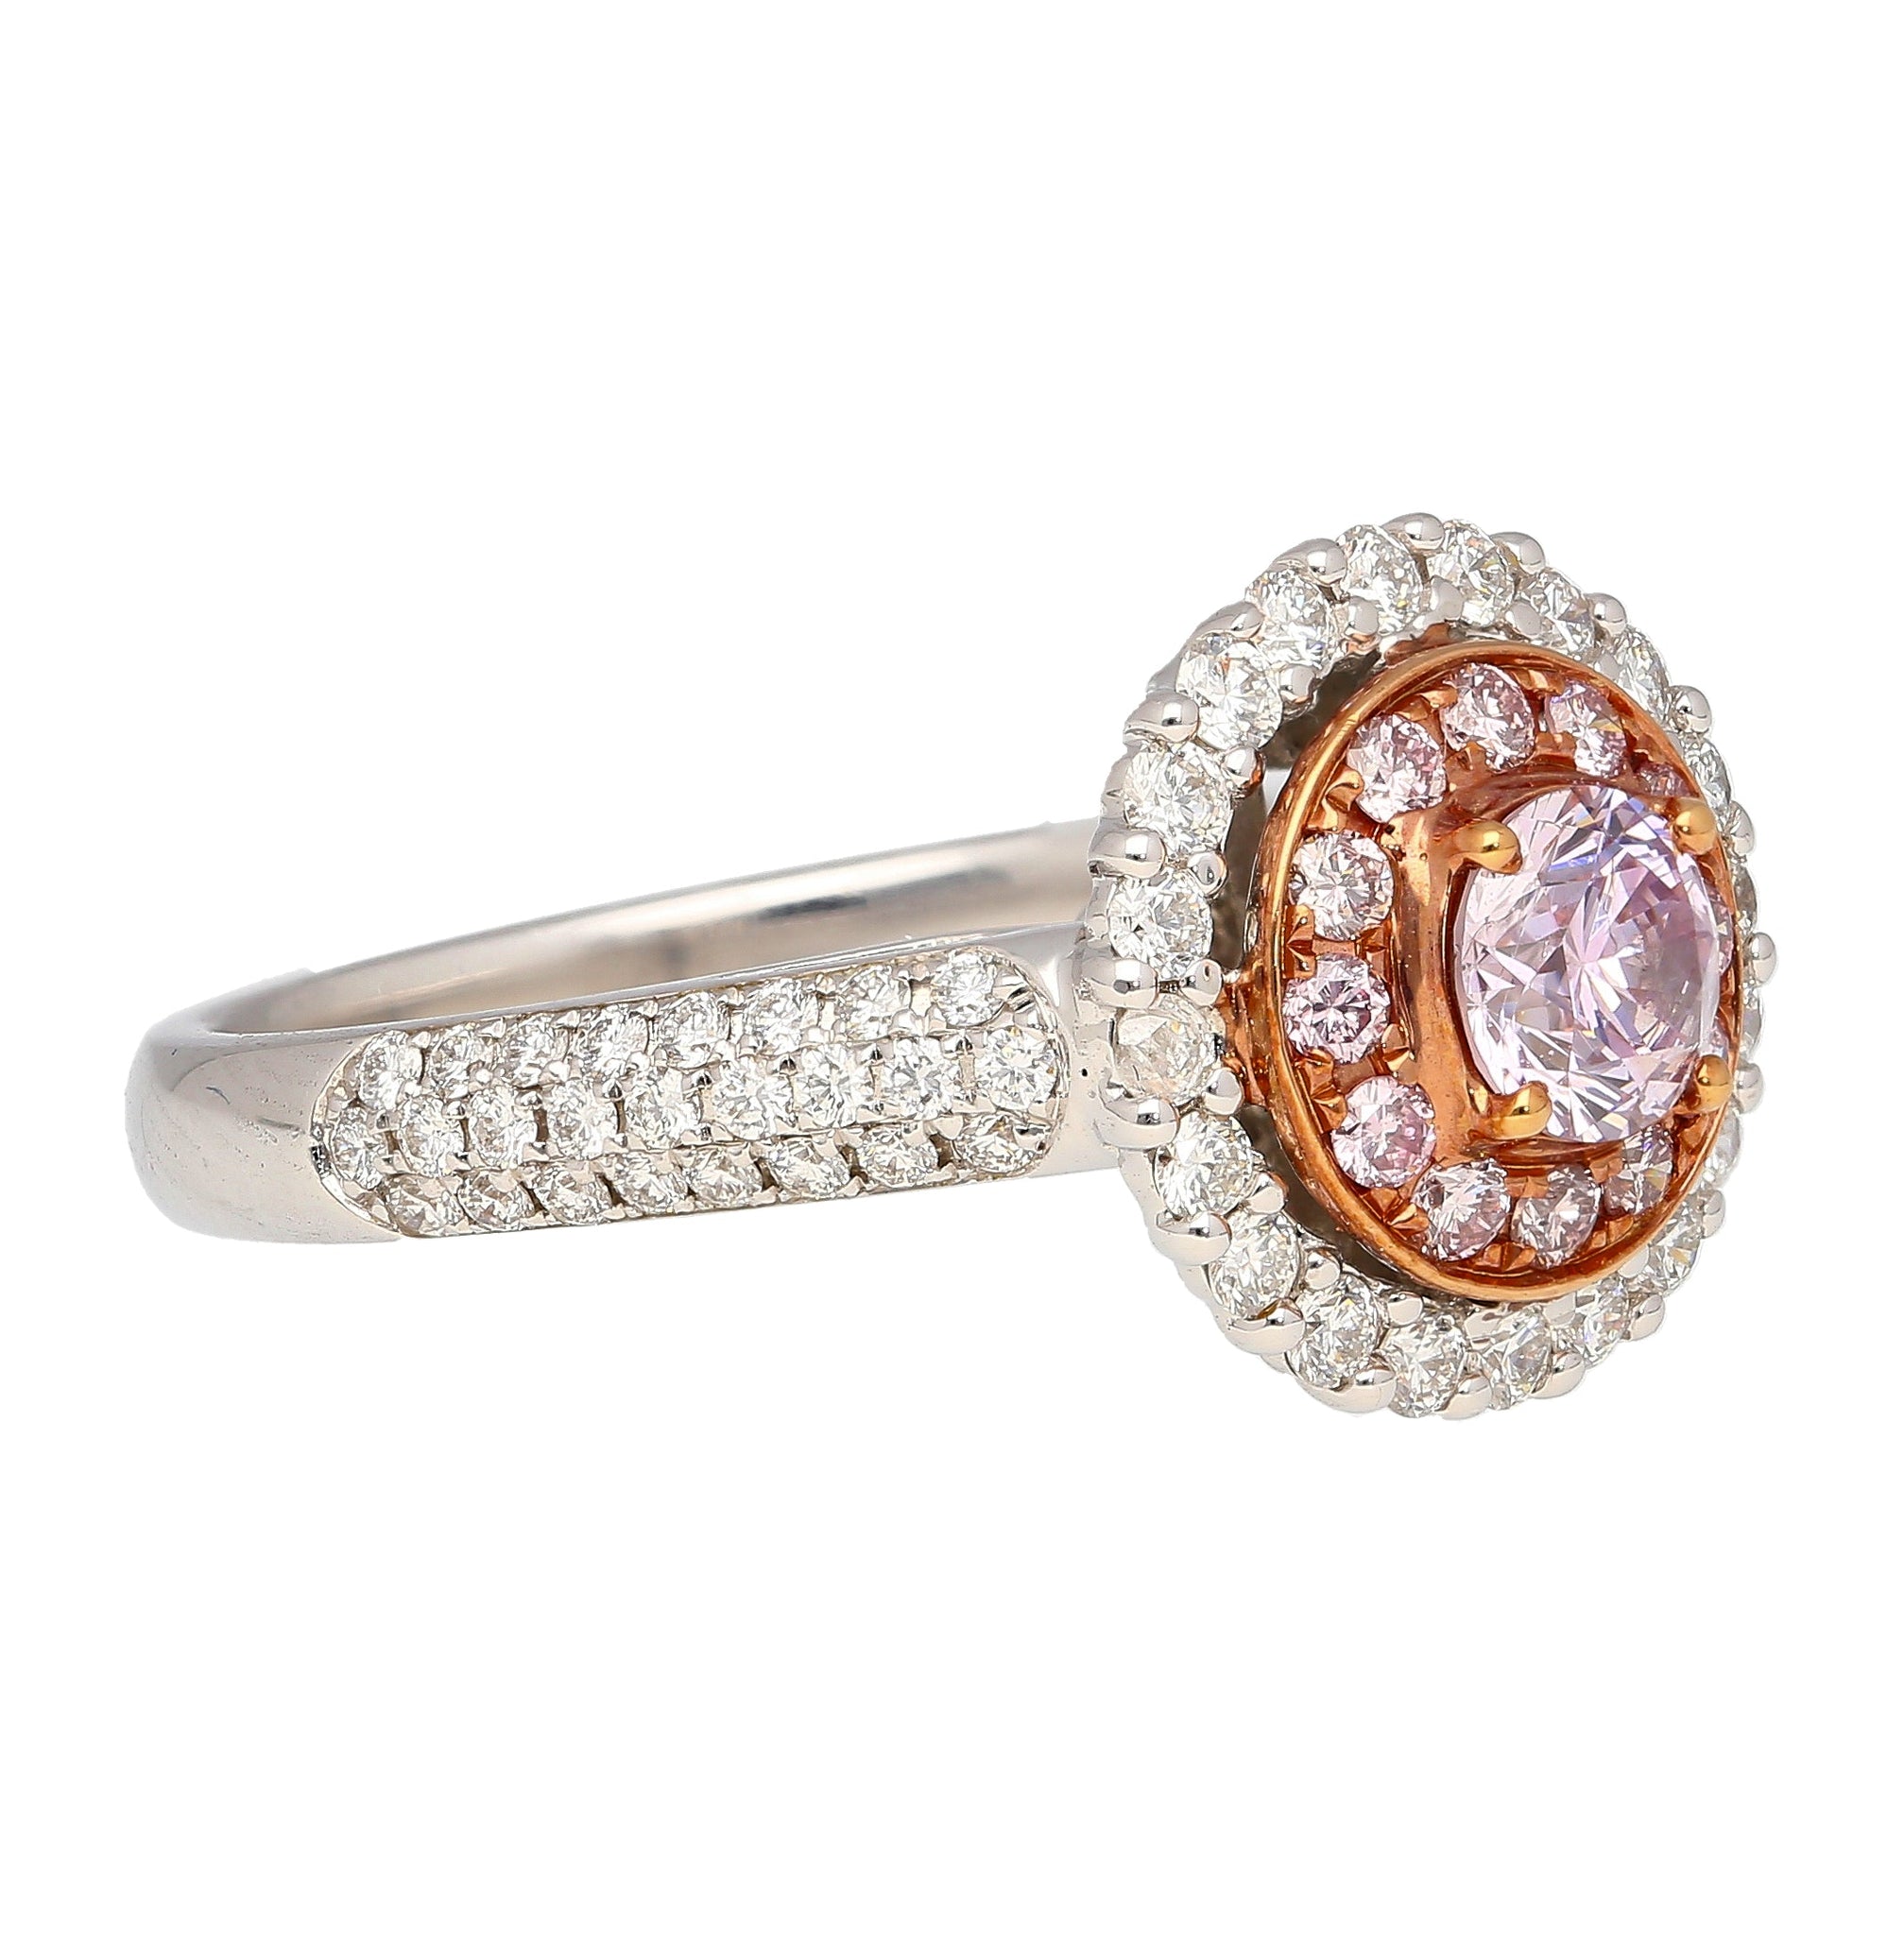 GIA Certified Round Cut Fancy Pink-Purple Diamond Ring with Diamond Halo